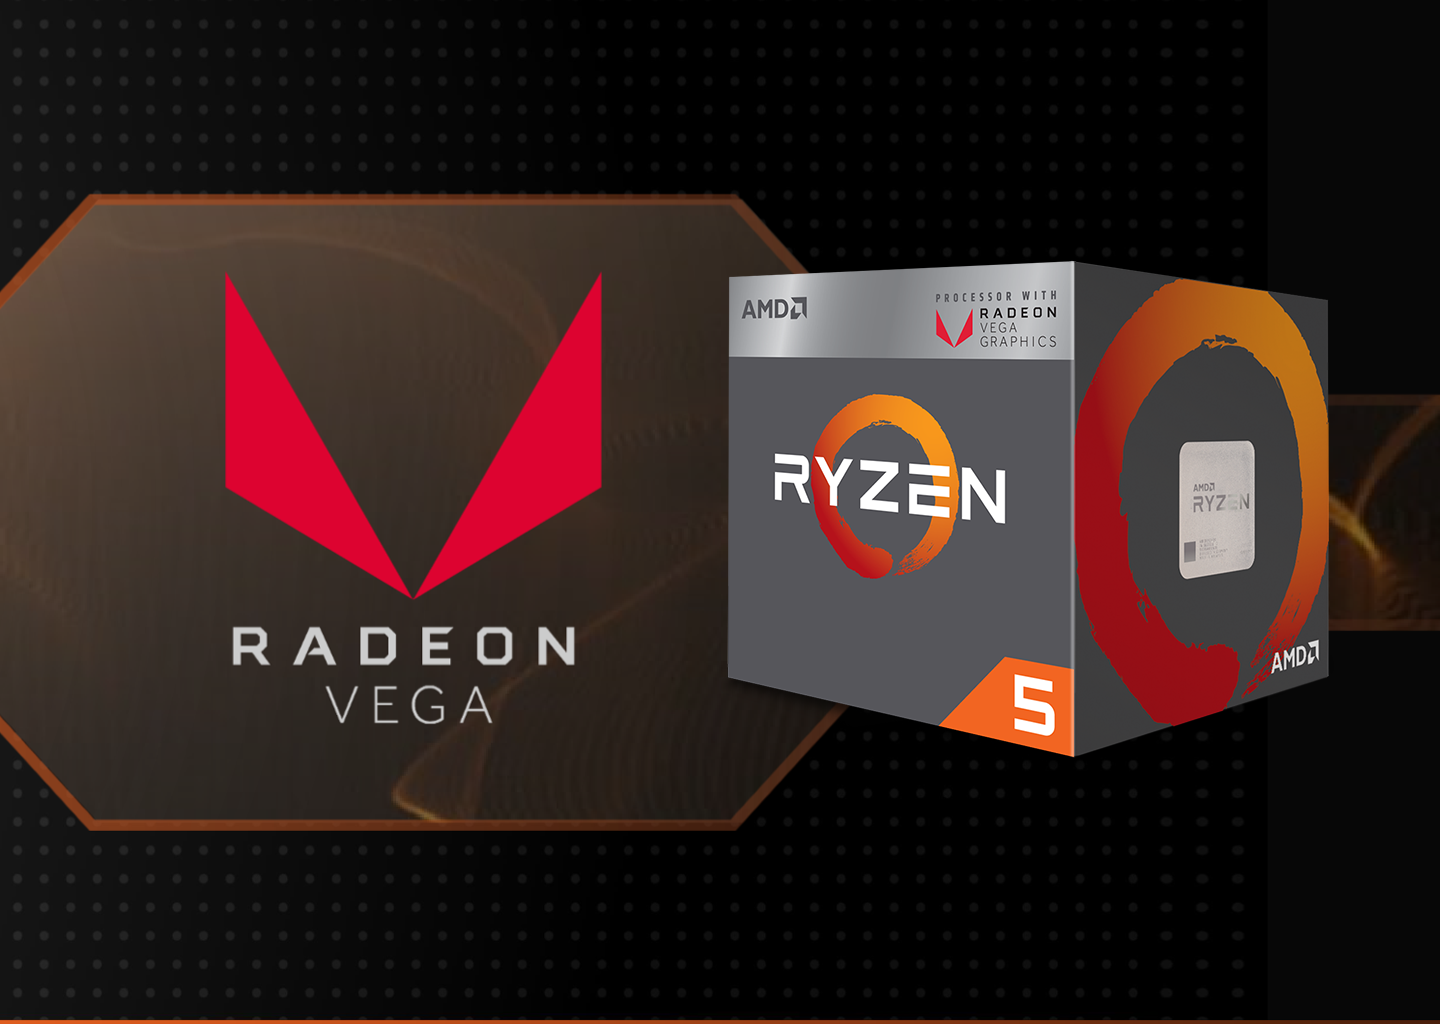 Amd radeon graphics ryzen 5. AMD Ryzen 5 релиз. AMD Radeon TM Vega 8 Graphics. ASUS Ryzen 5 Radeon Vega Graphics. AMD Radeon 5 процессор.